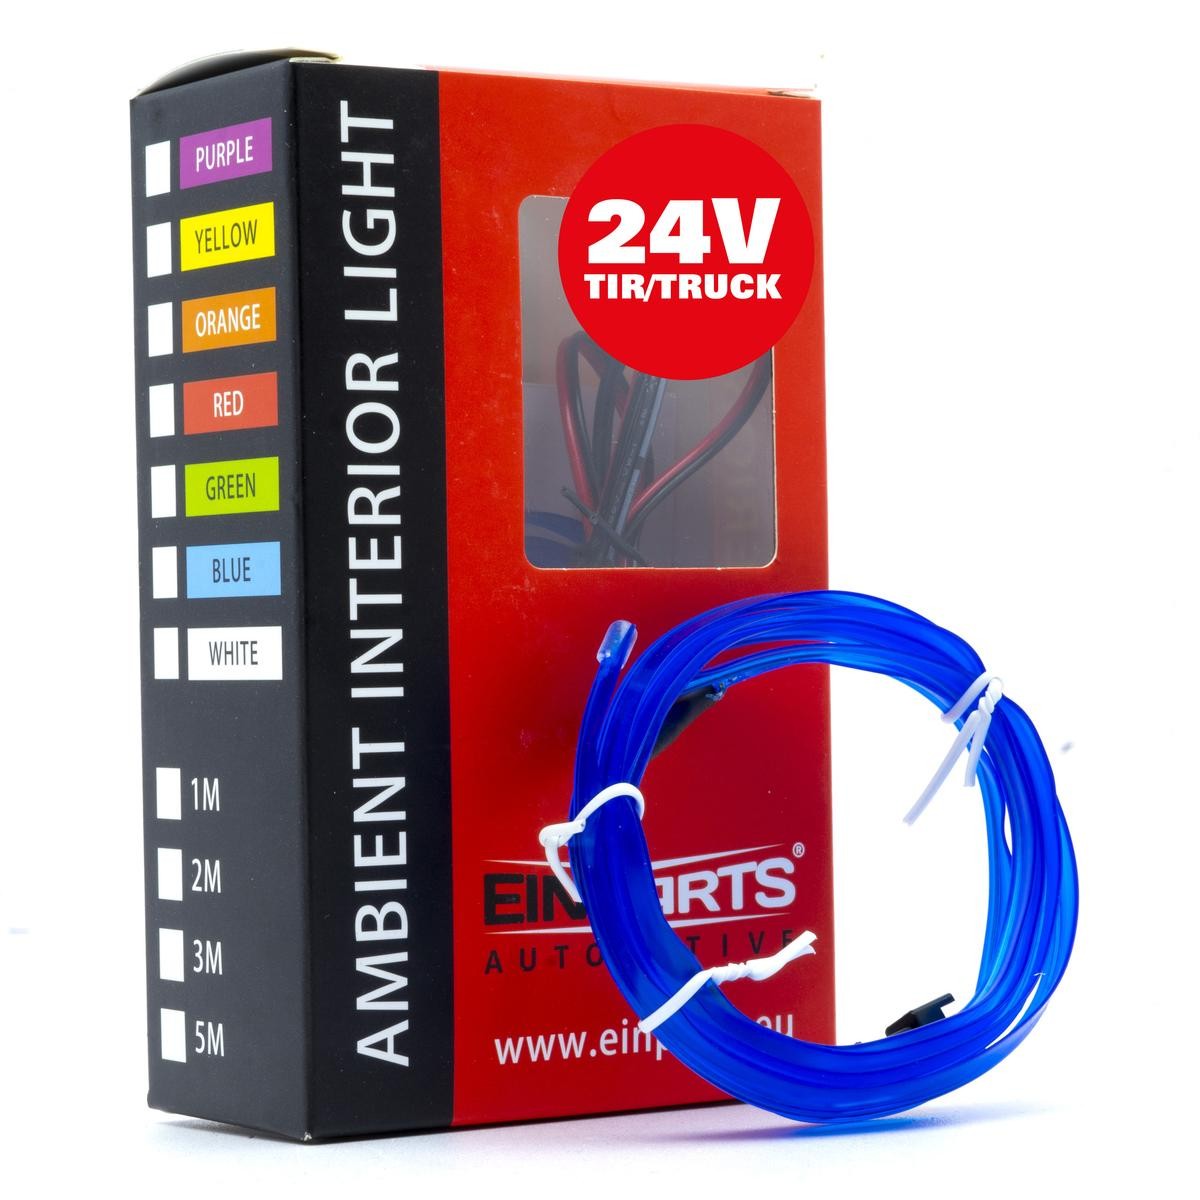 EINPARTS Interior Light EPAL1M BLUE 24V buy